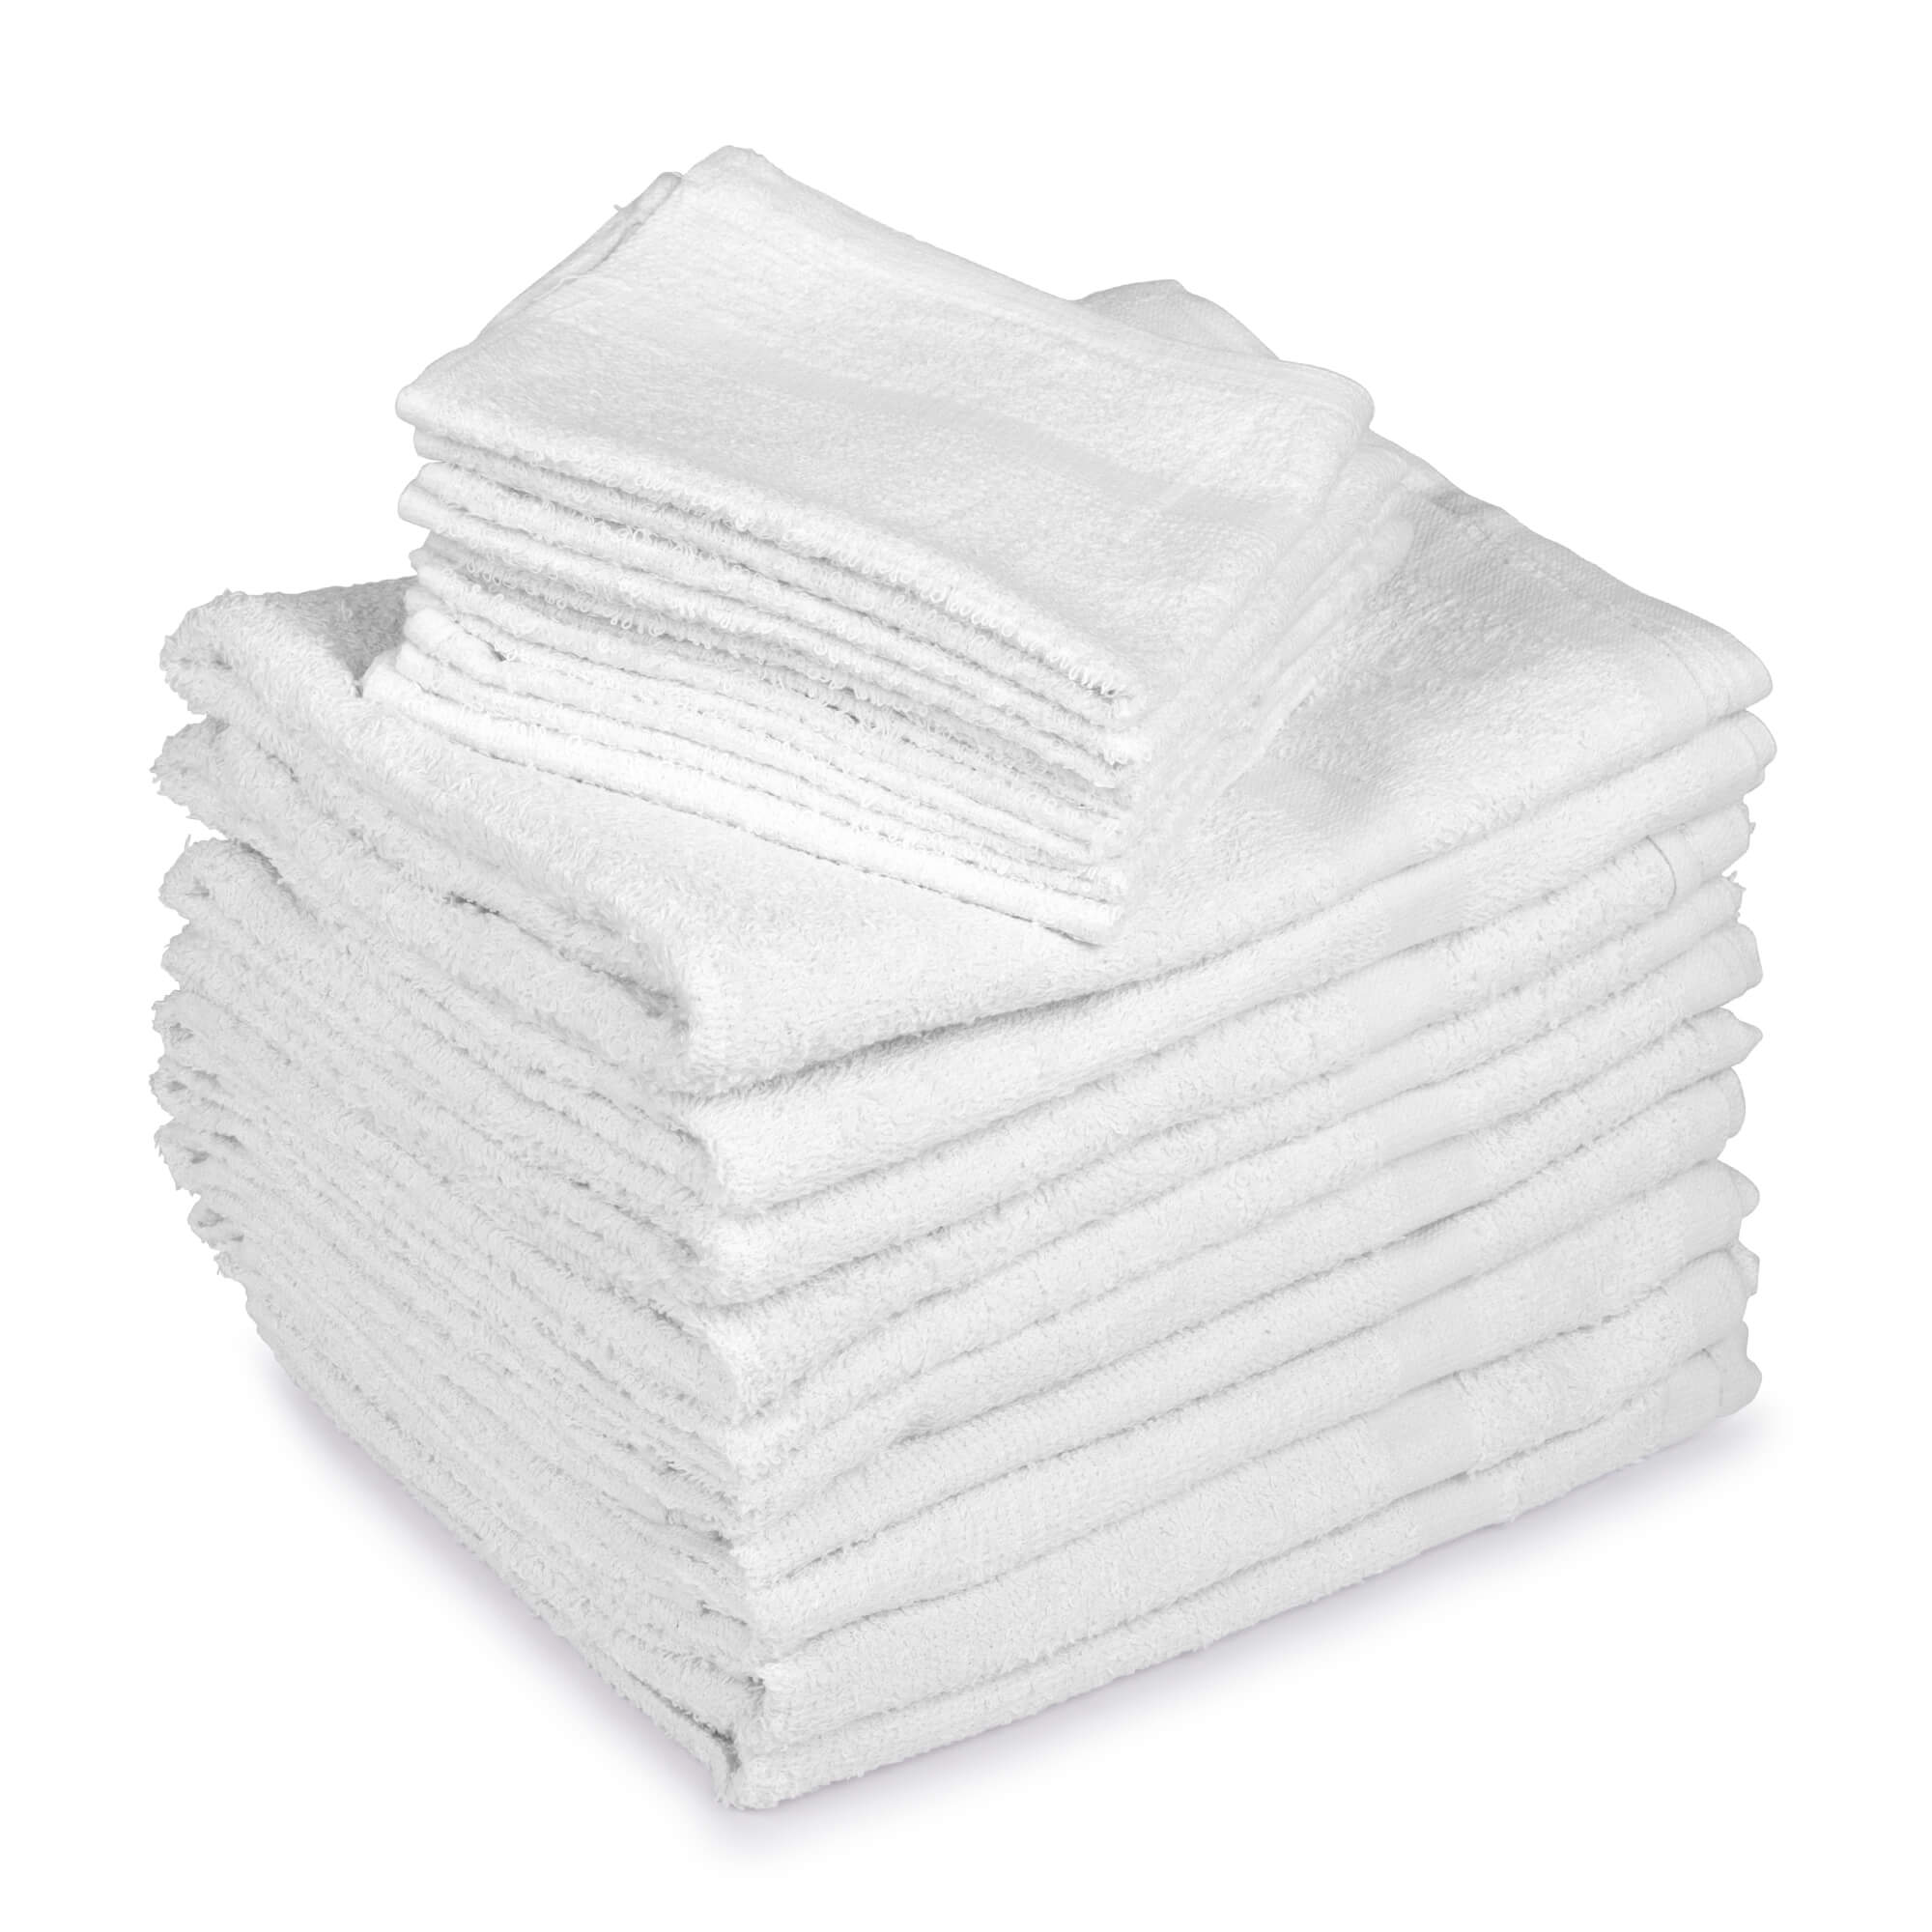 Economy Towels & Washcloths